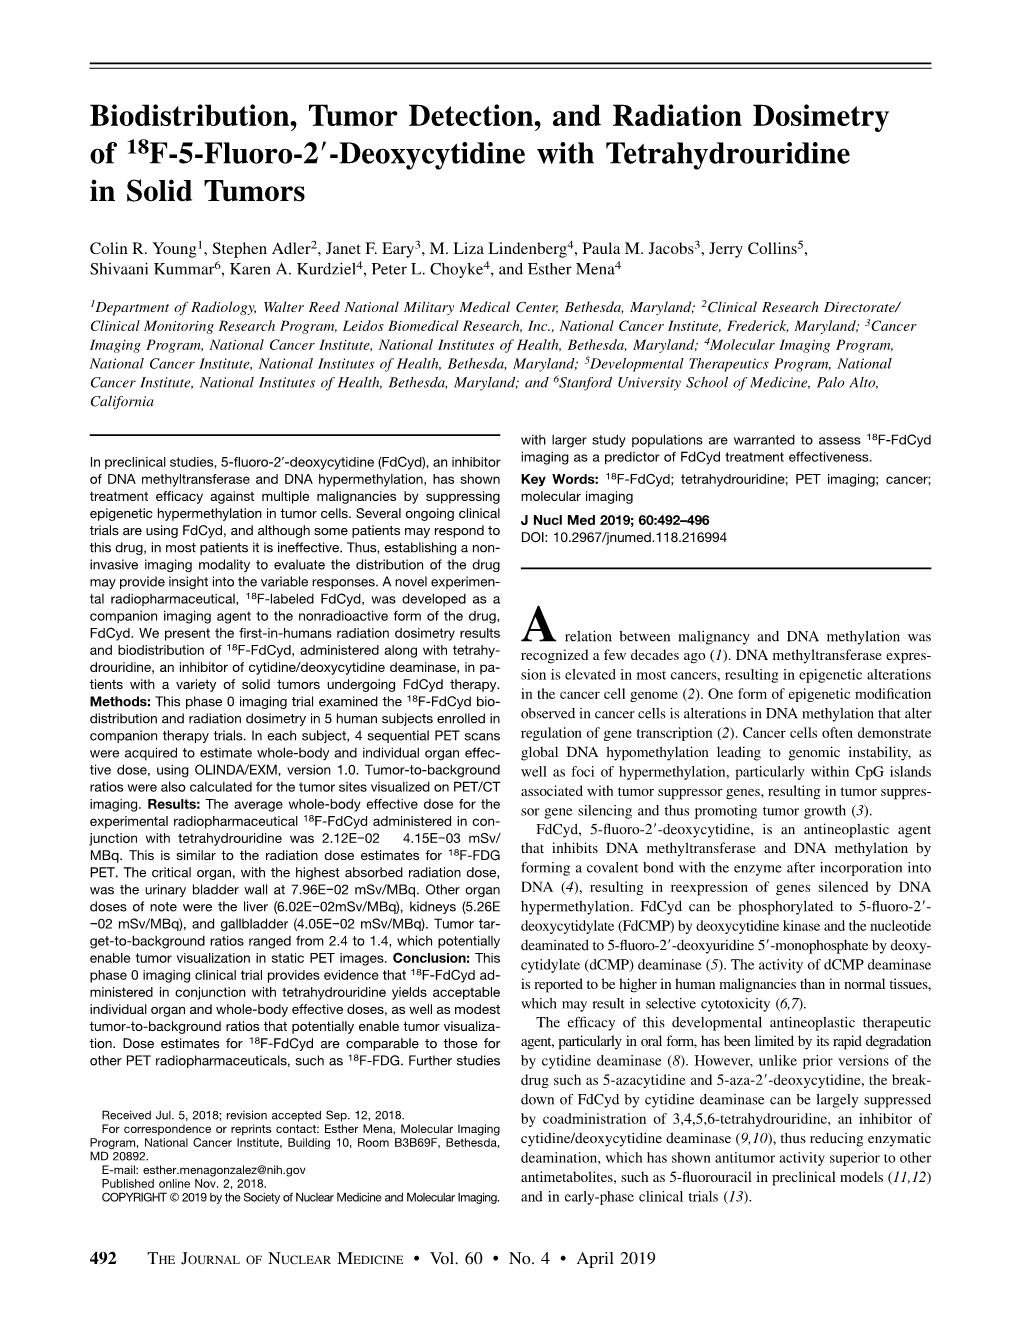 Deoxycytidine with Tetrahydrouridine in Solid Tumors